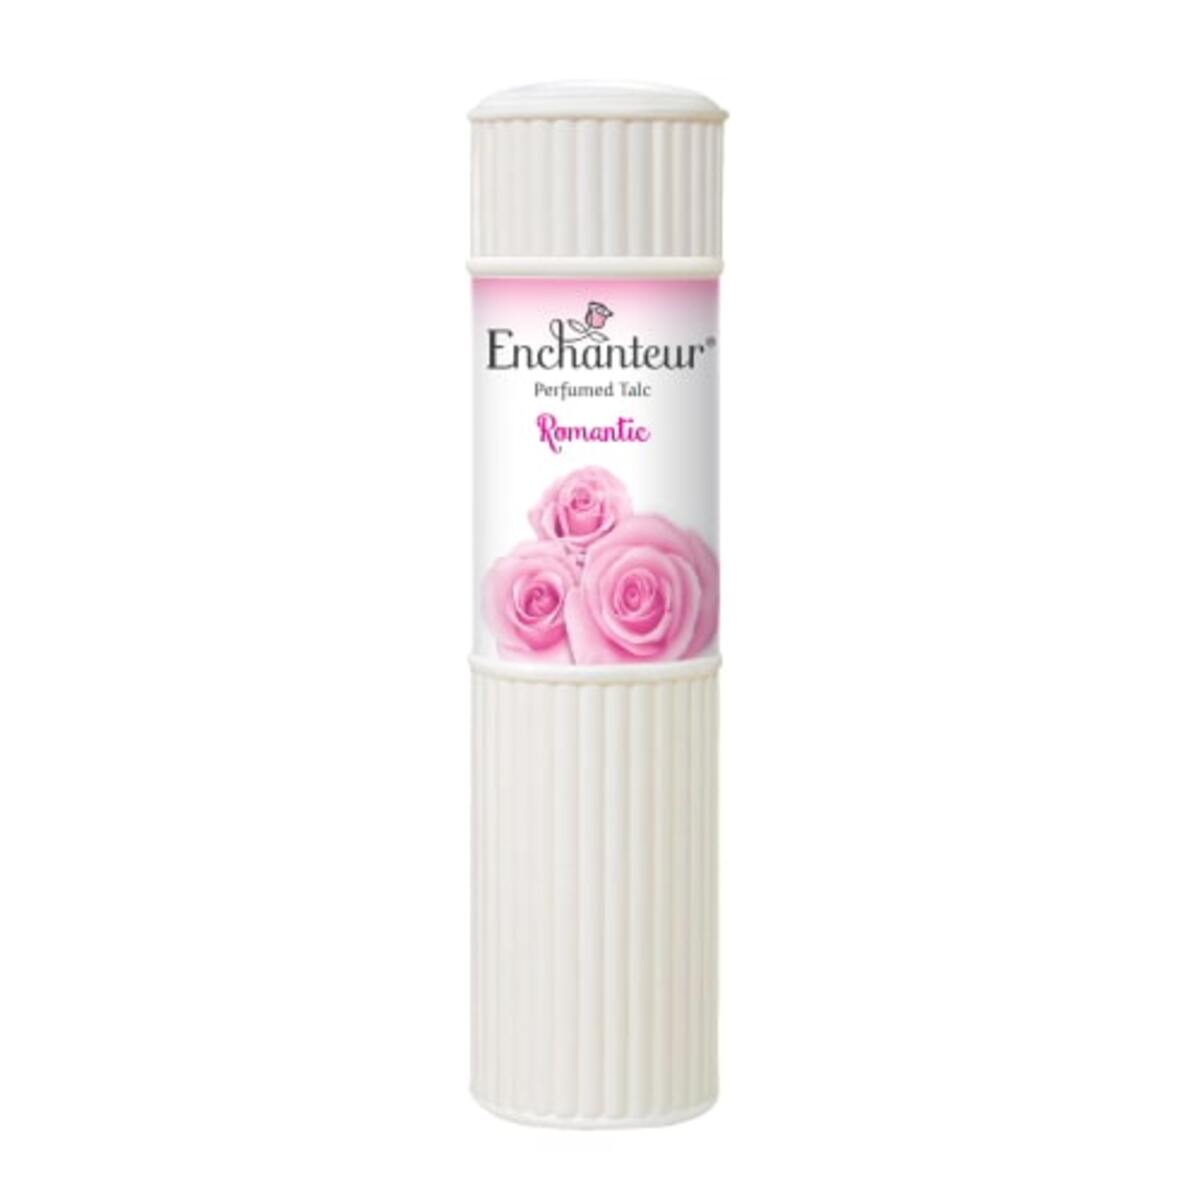 Enchanteur Romantic Talc Fragrance Powder 250 g